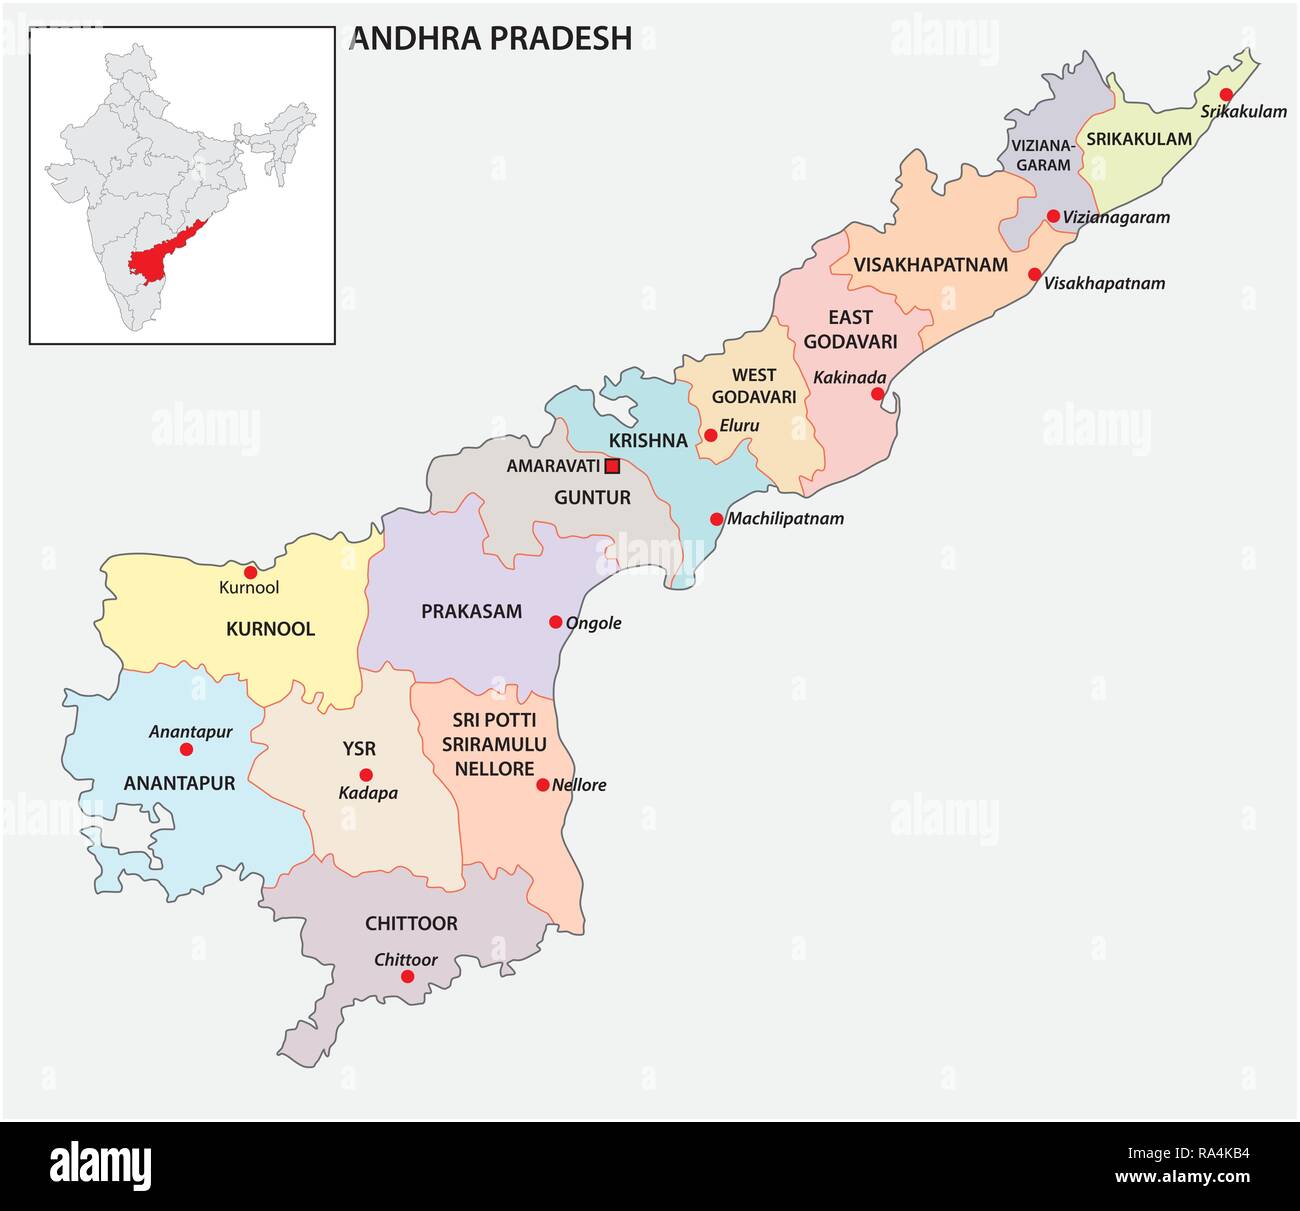 La carte administrative et politique de l'Etat indien de l'Andhra Pradesh, Inde Illustration de Vecteur